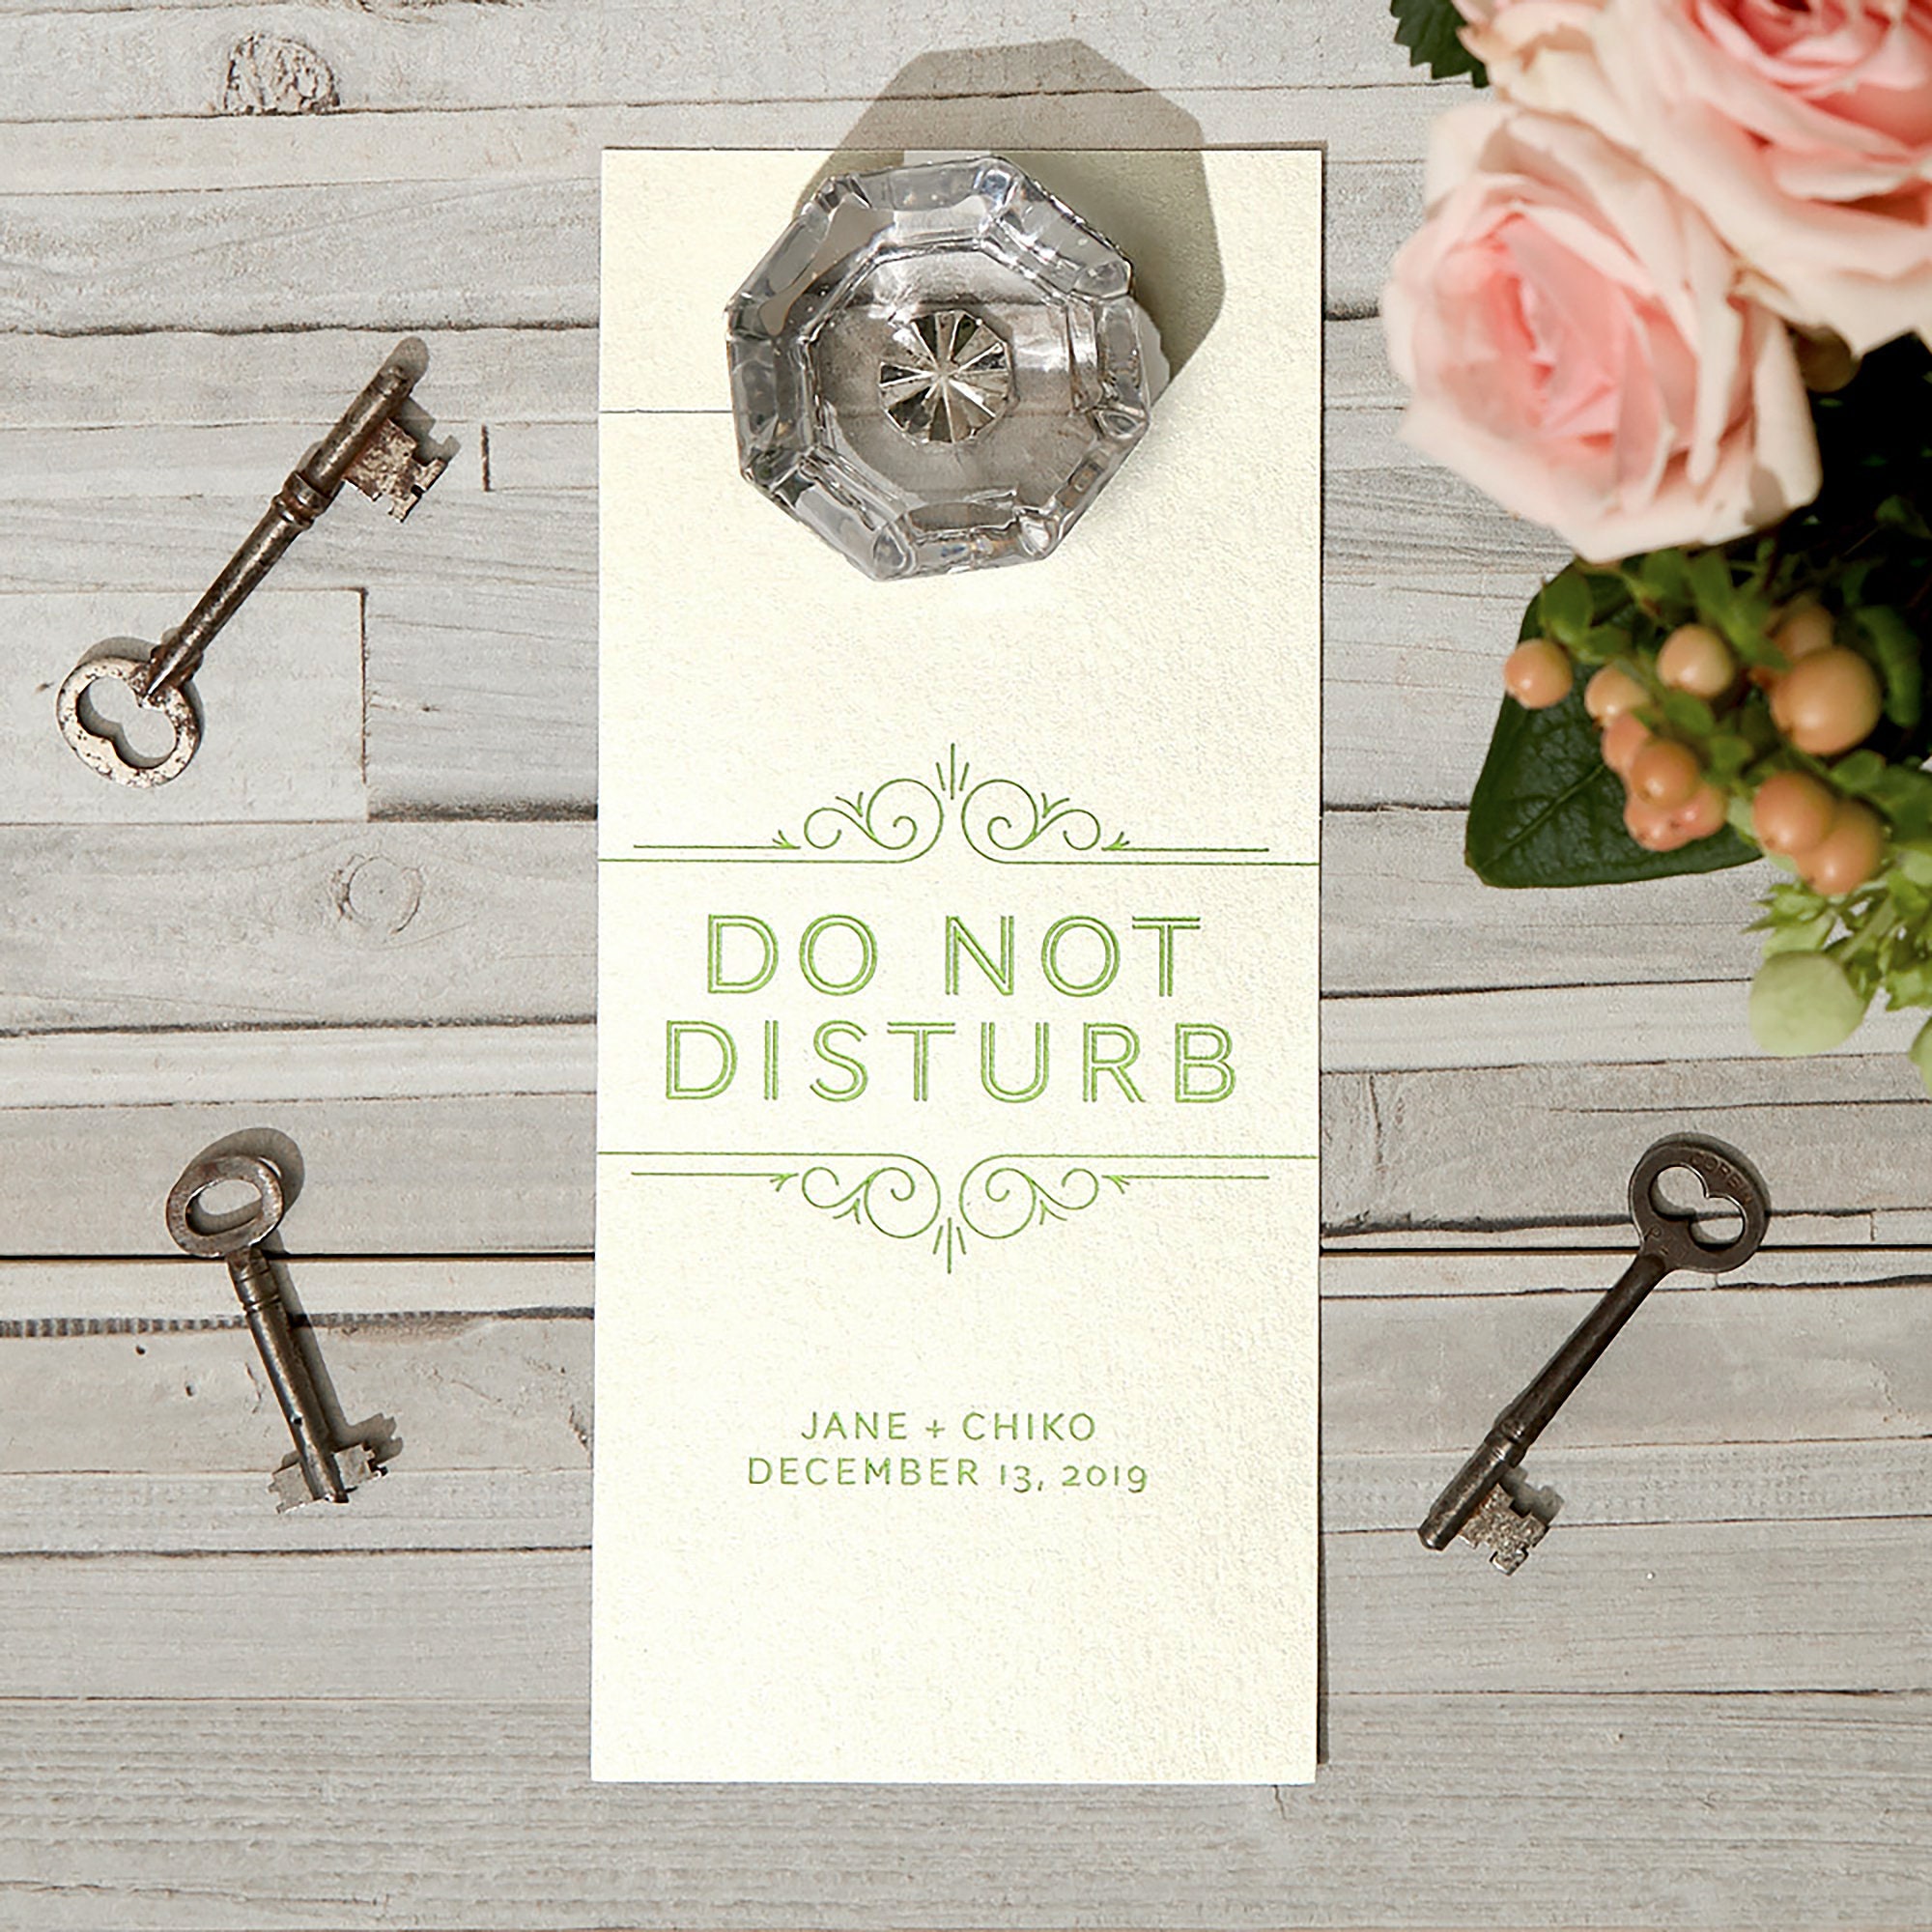 Personalized Do Not Disturb Door Hanger - Art Deco Scroll Wedding Favor, Goodie Bag Hotel Welcome Party Decor